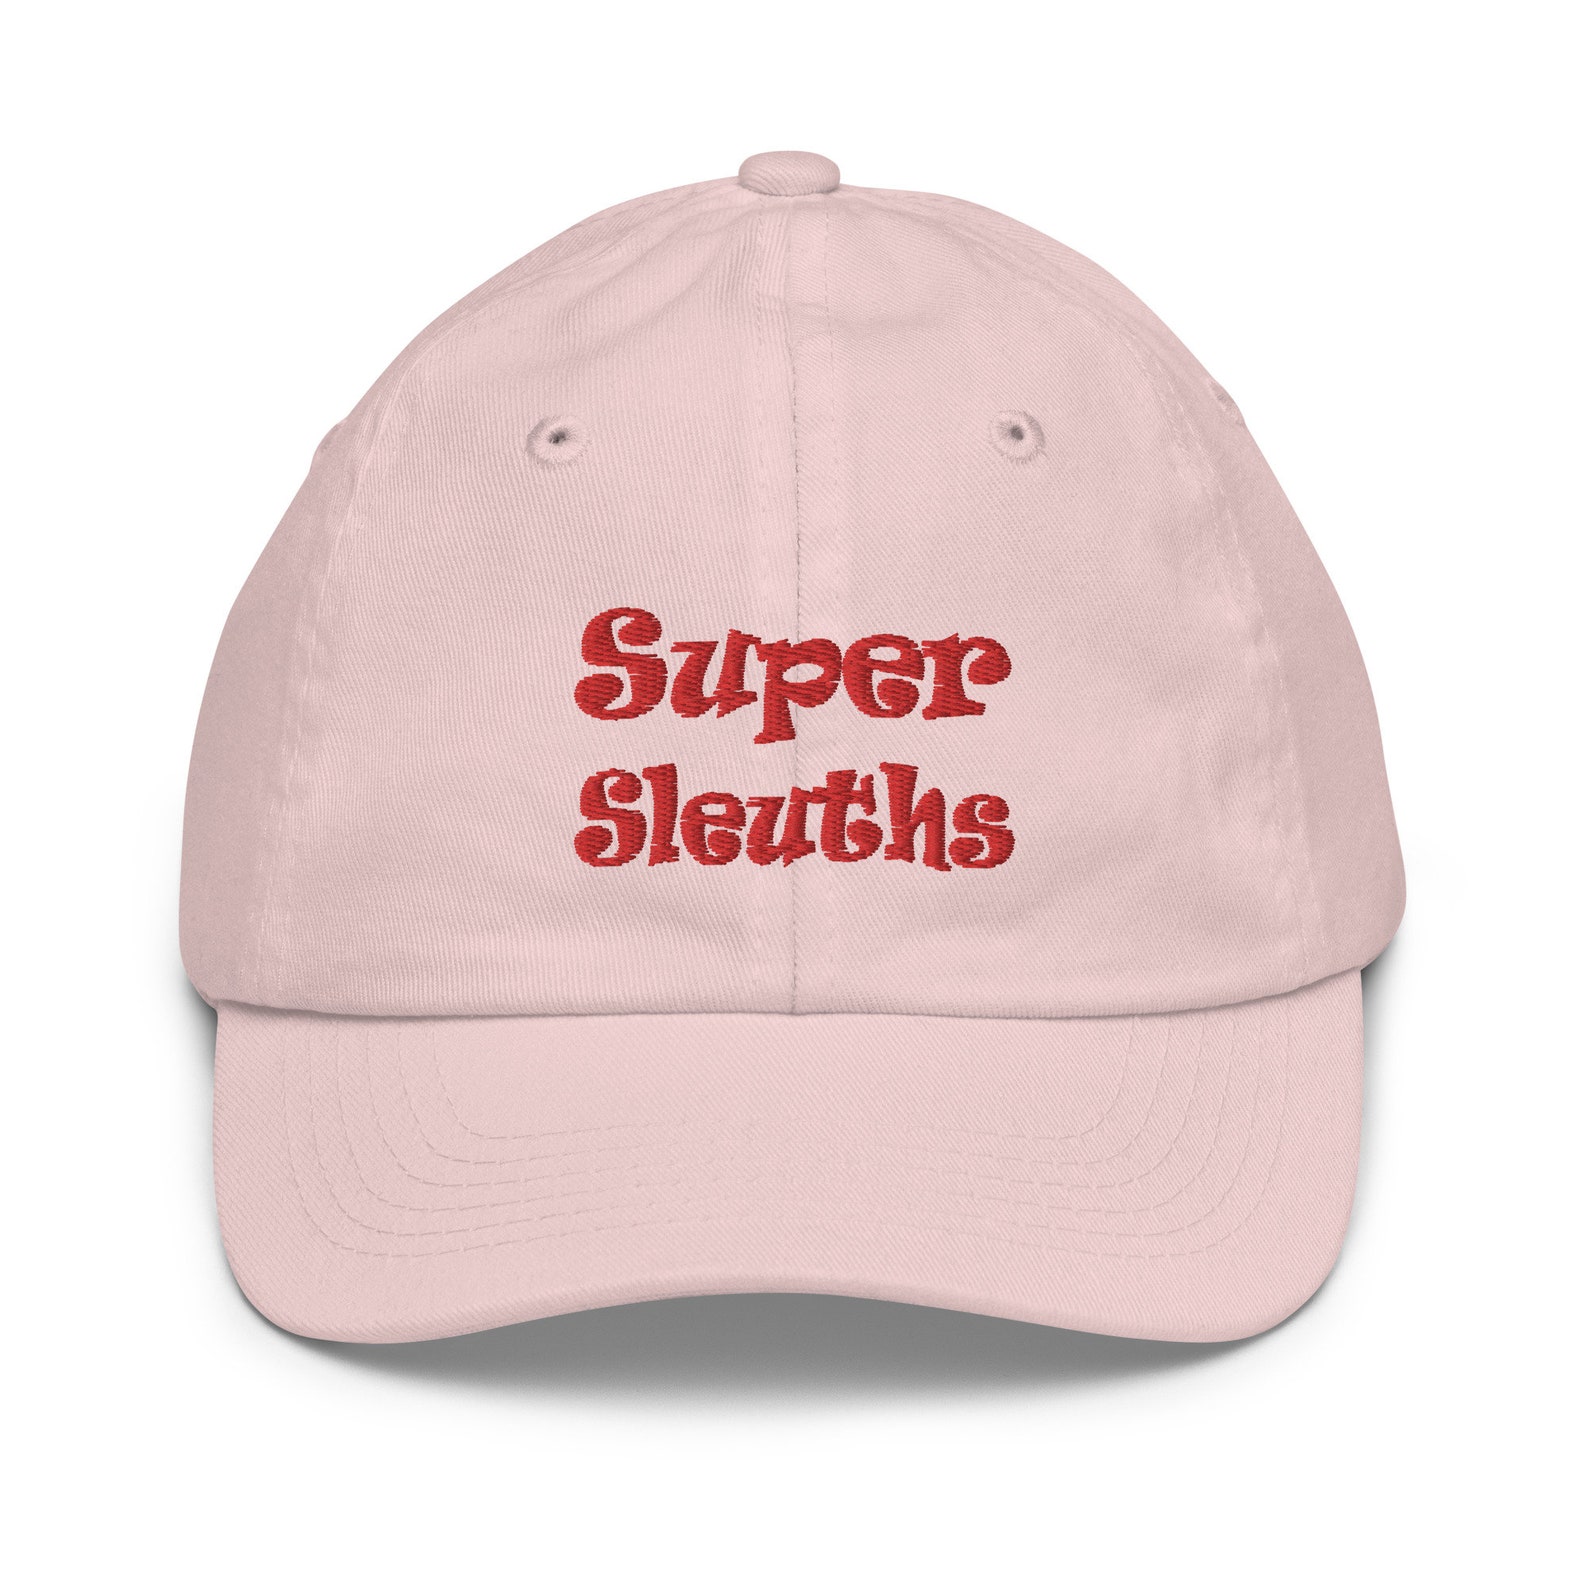 Super Sleuths Story Club cap